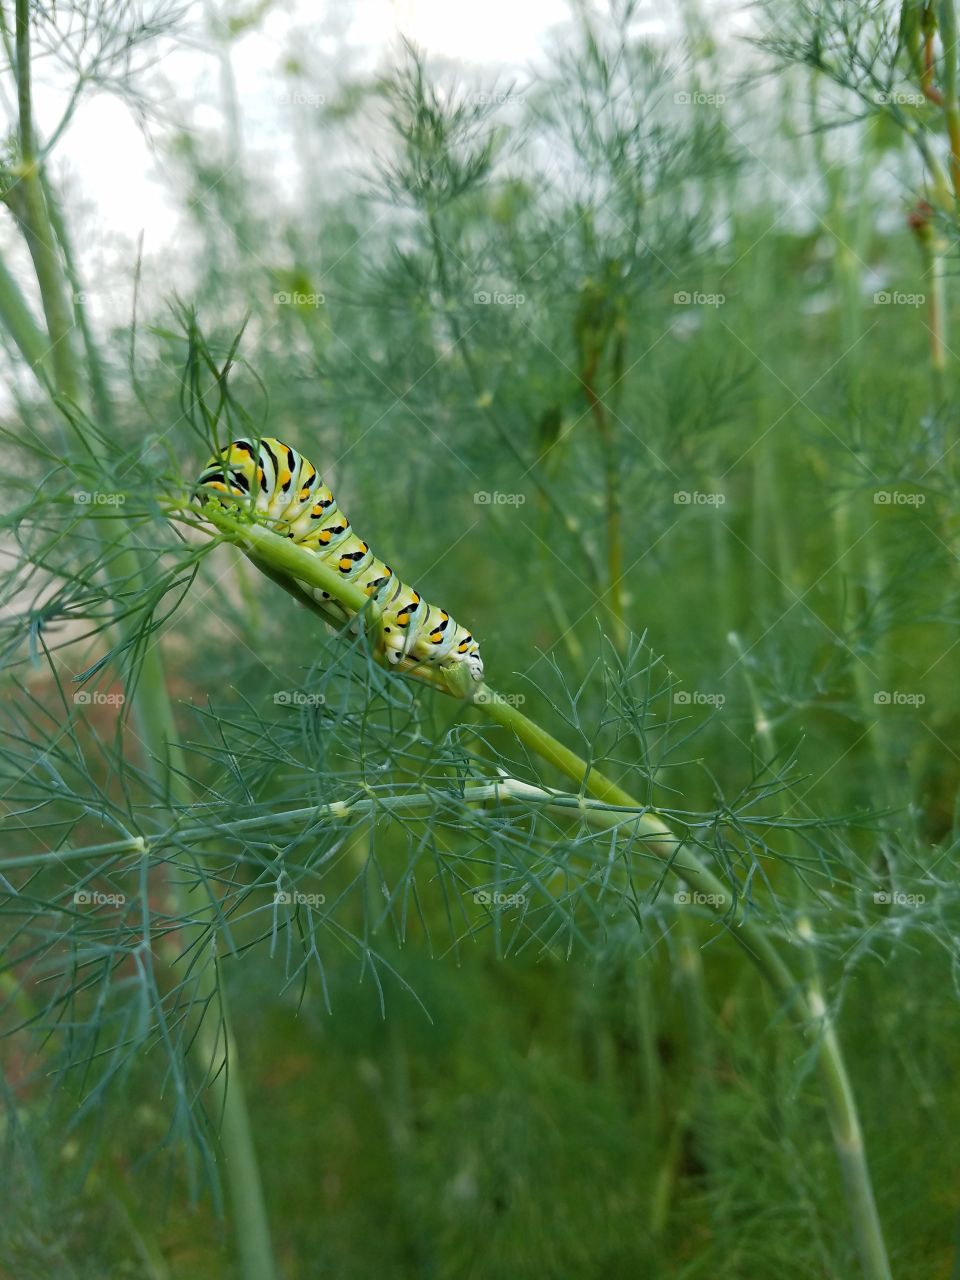 Caterpillar in the Dill